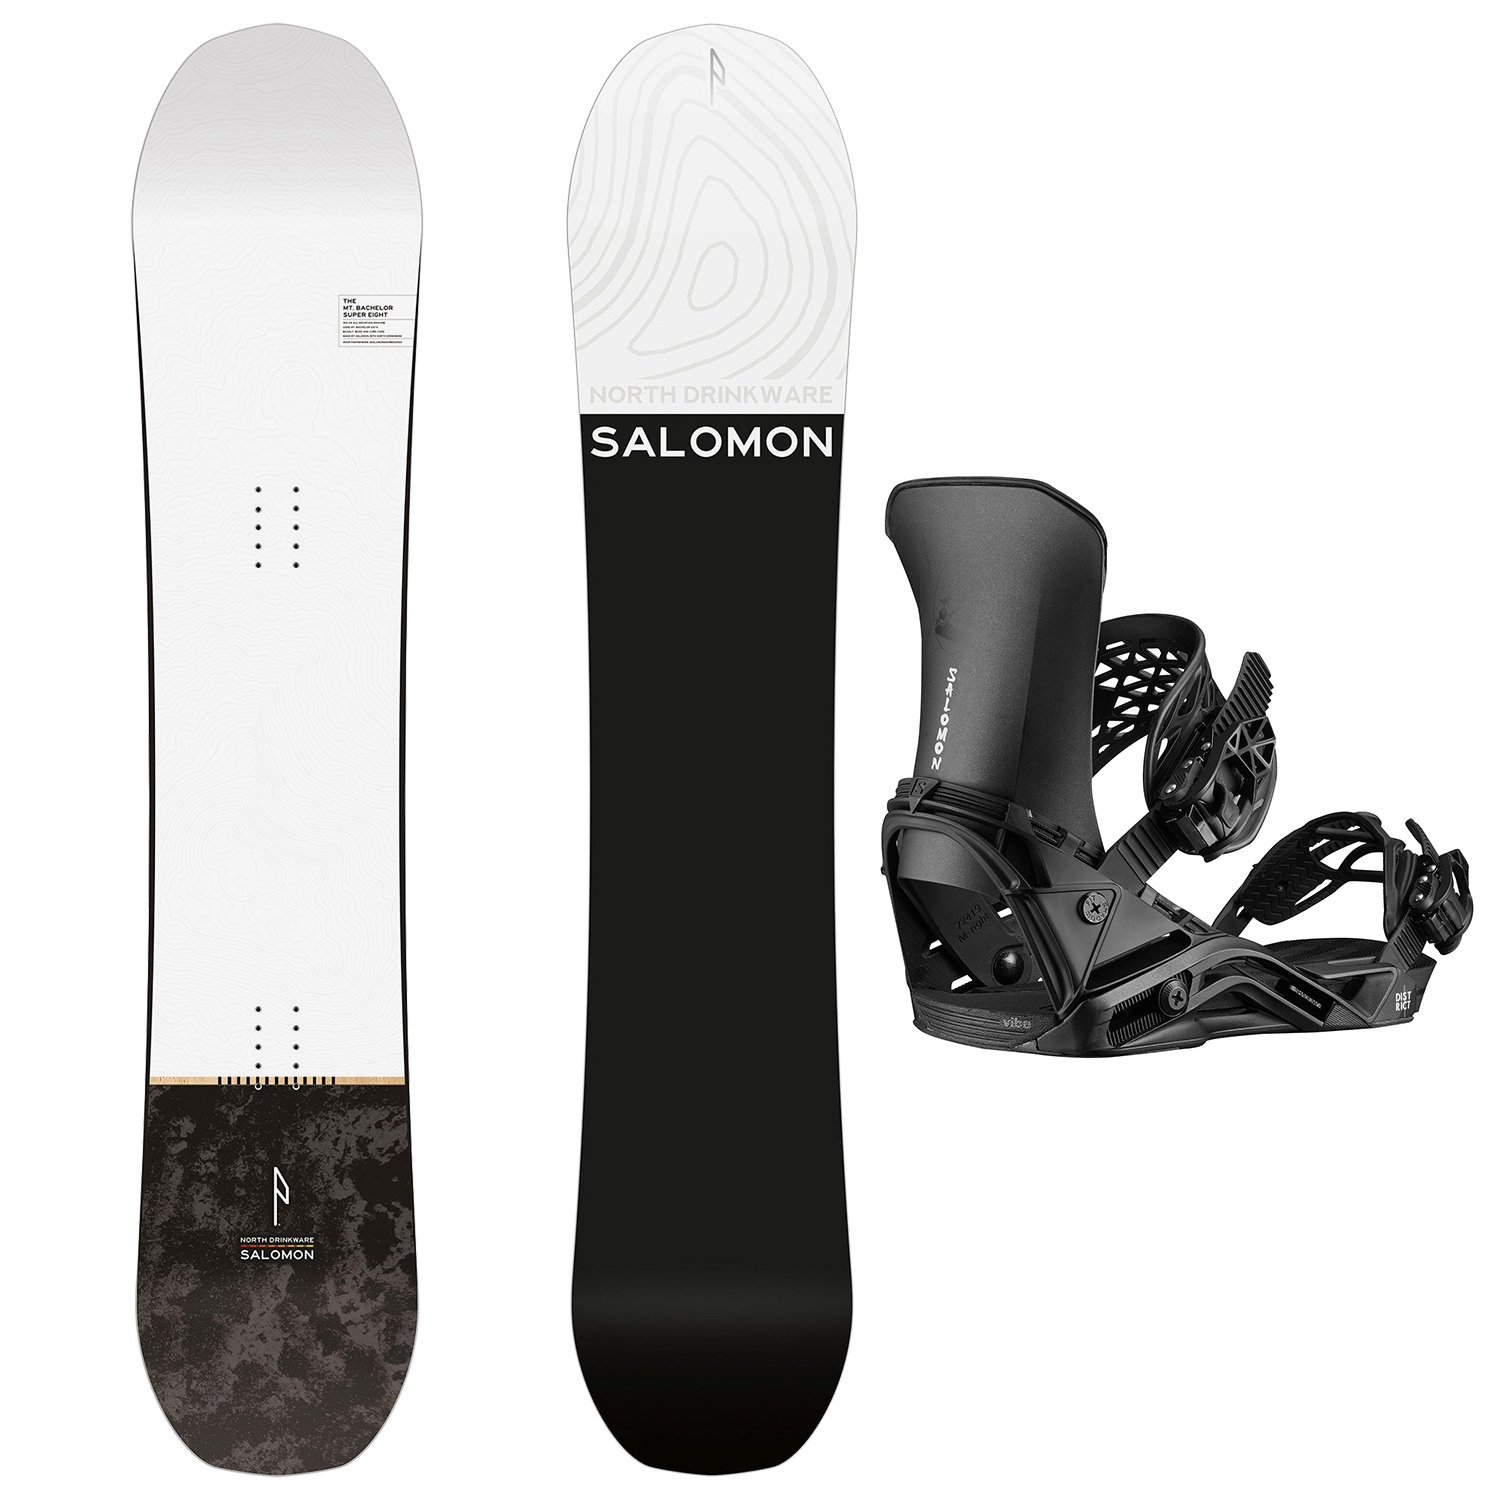 Salomon Super 8 All Mountain Powder Snowboard Package Snowboard